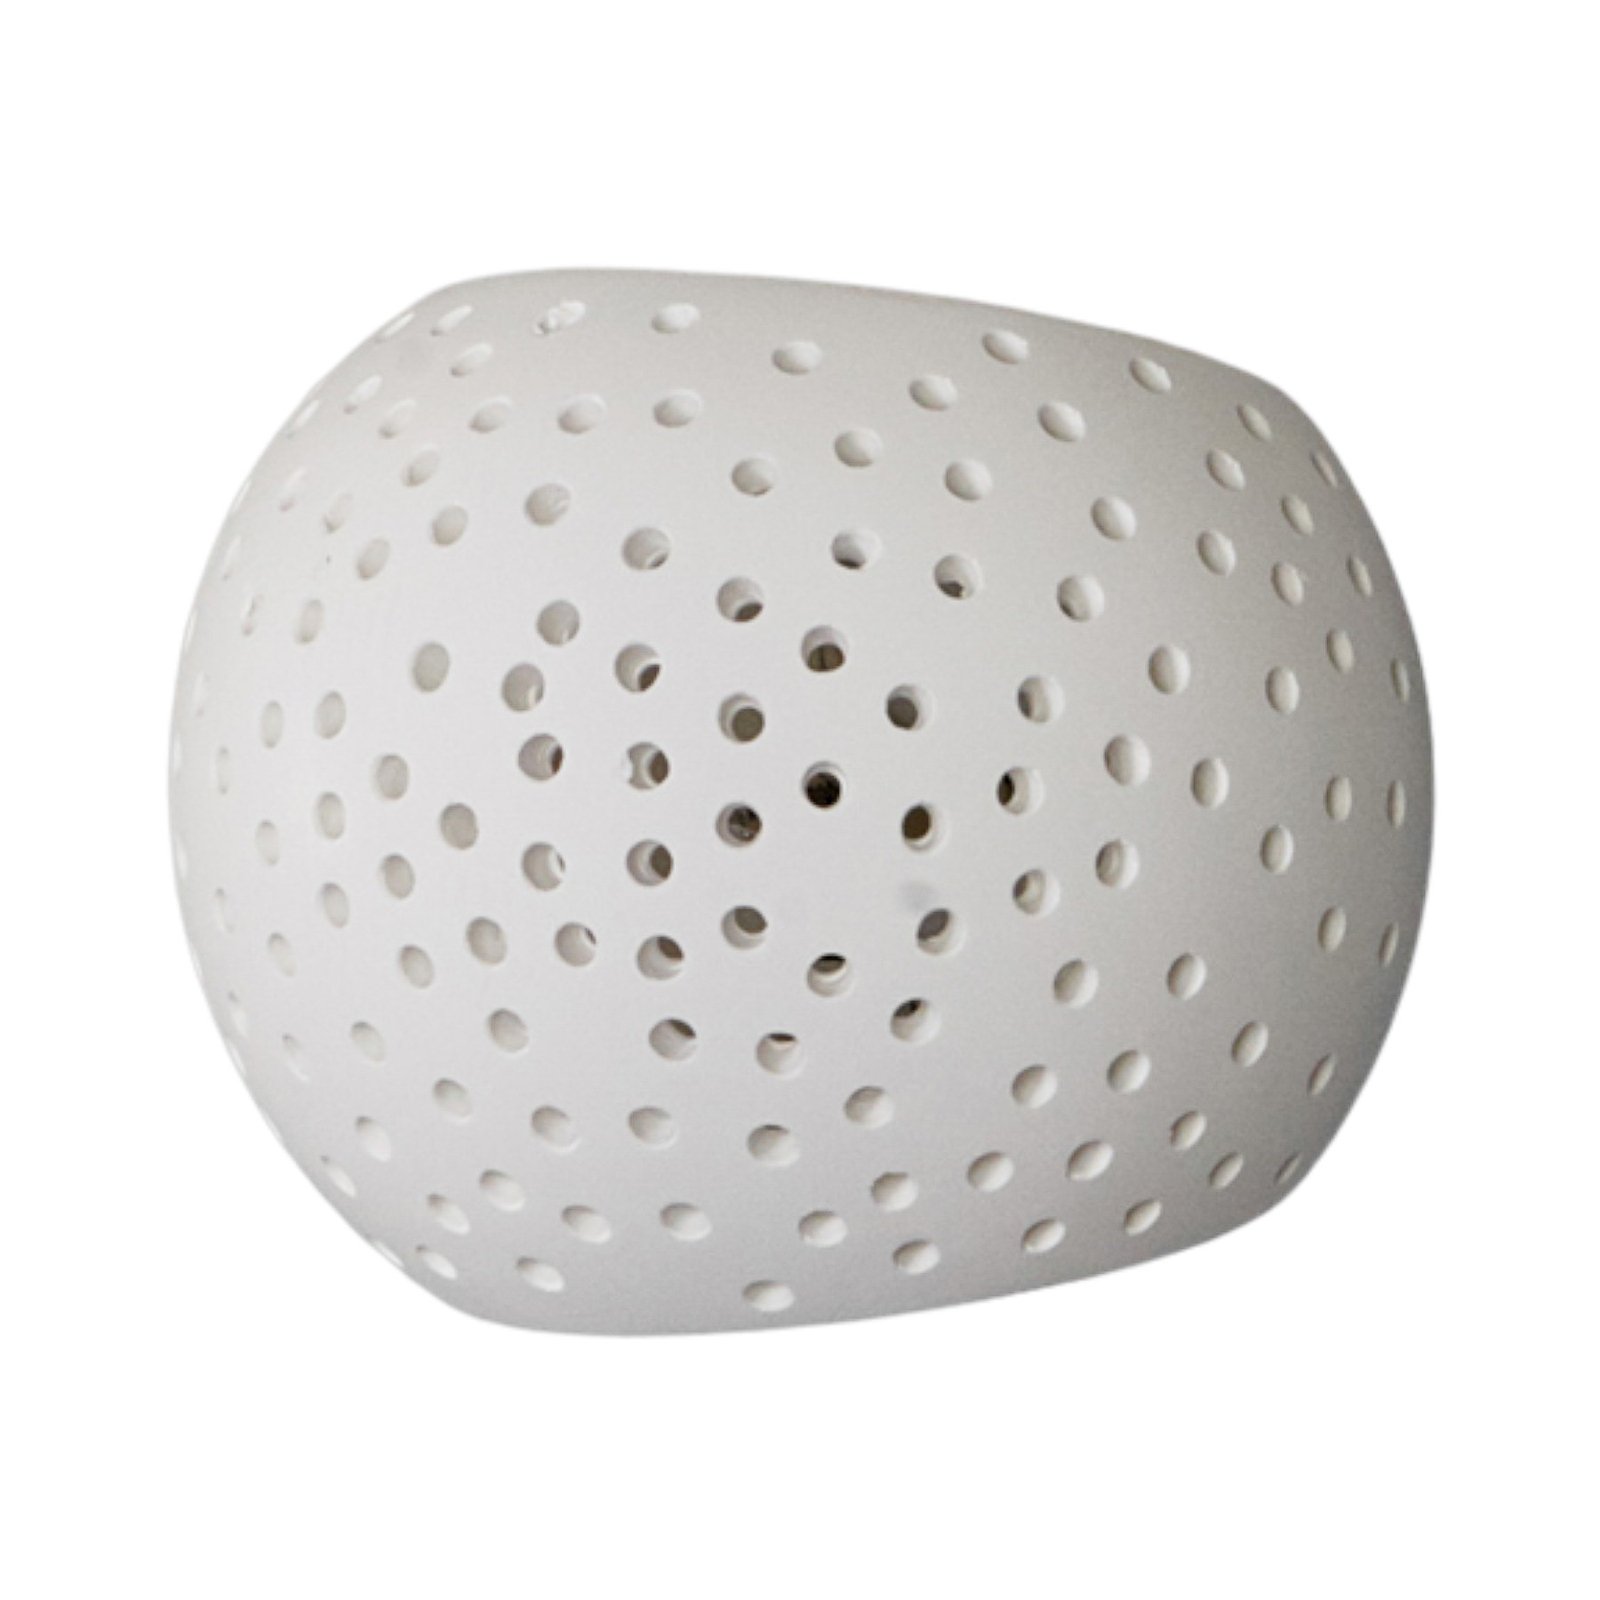 Spherical plaster wall lamp Jiru with hole pattern